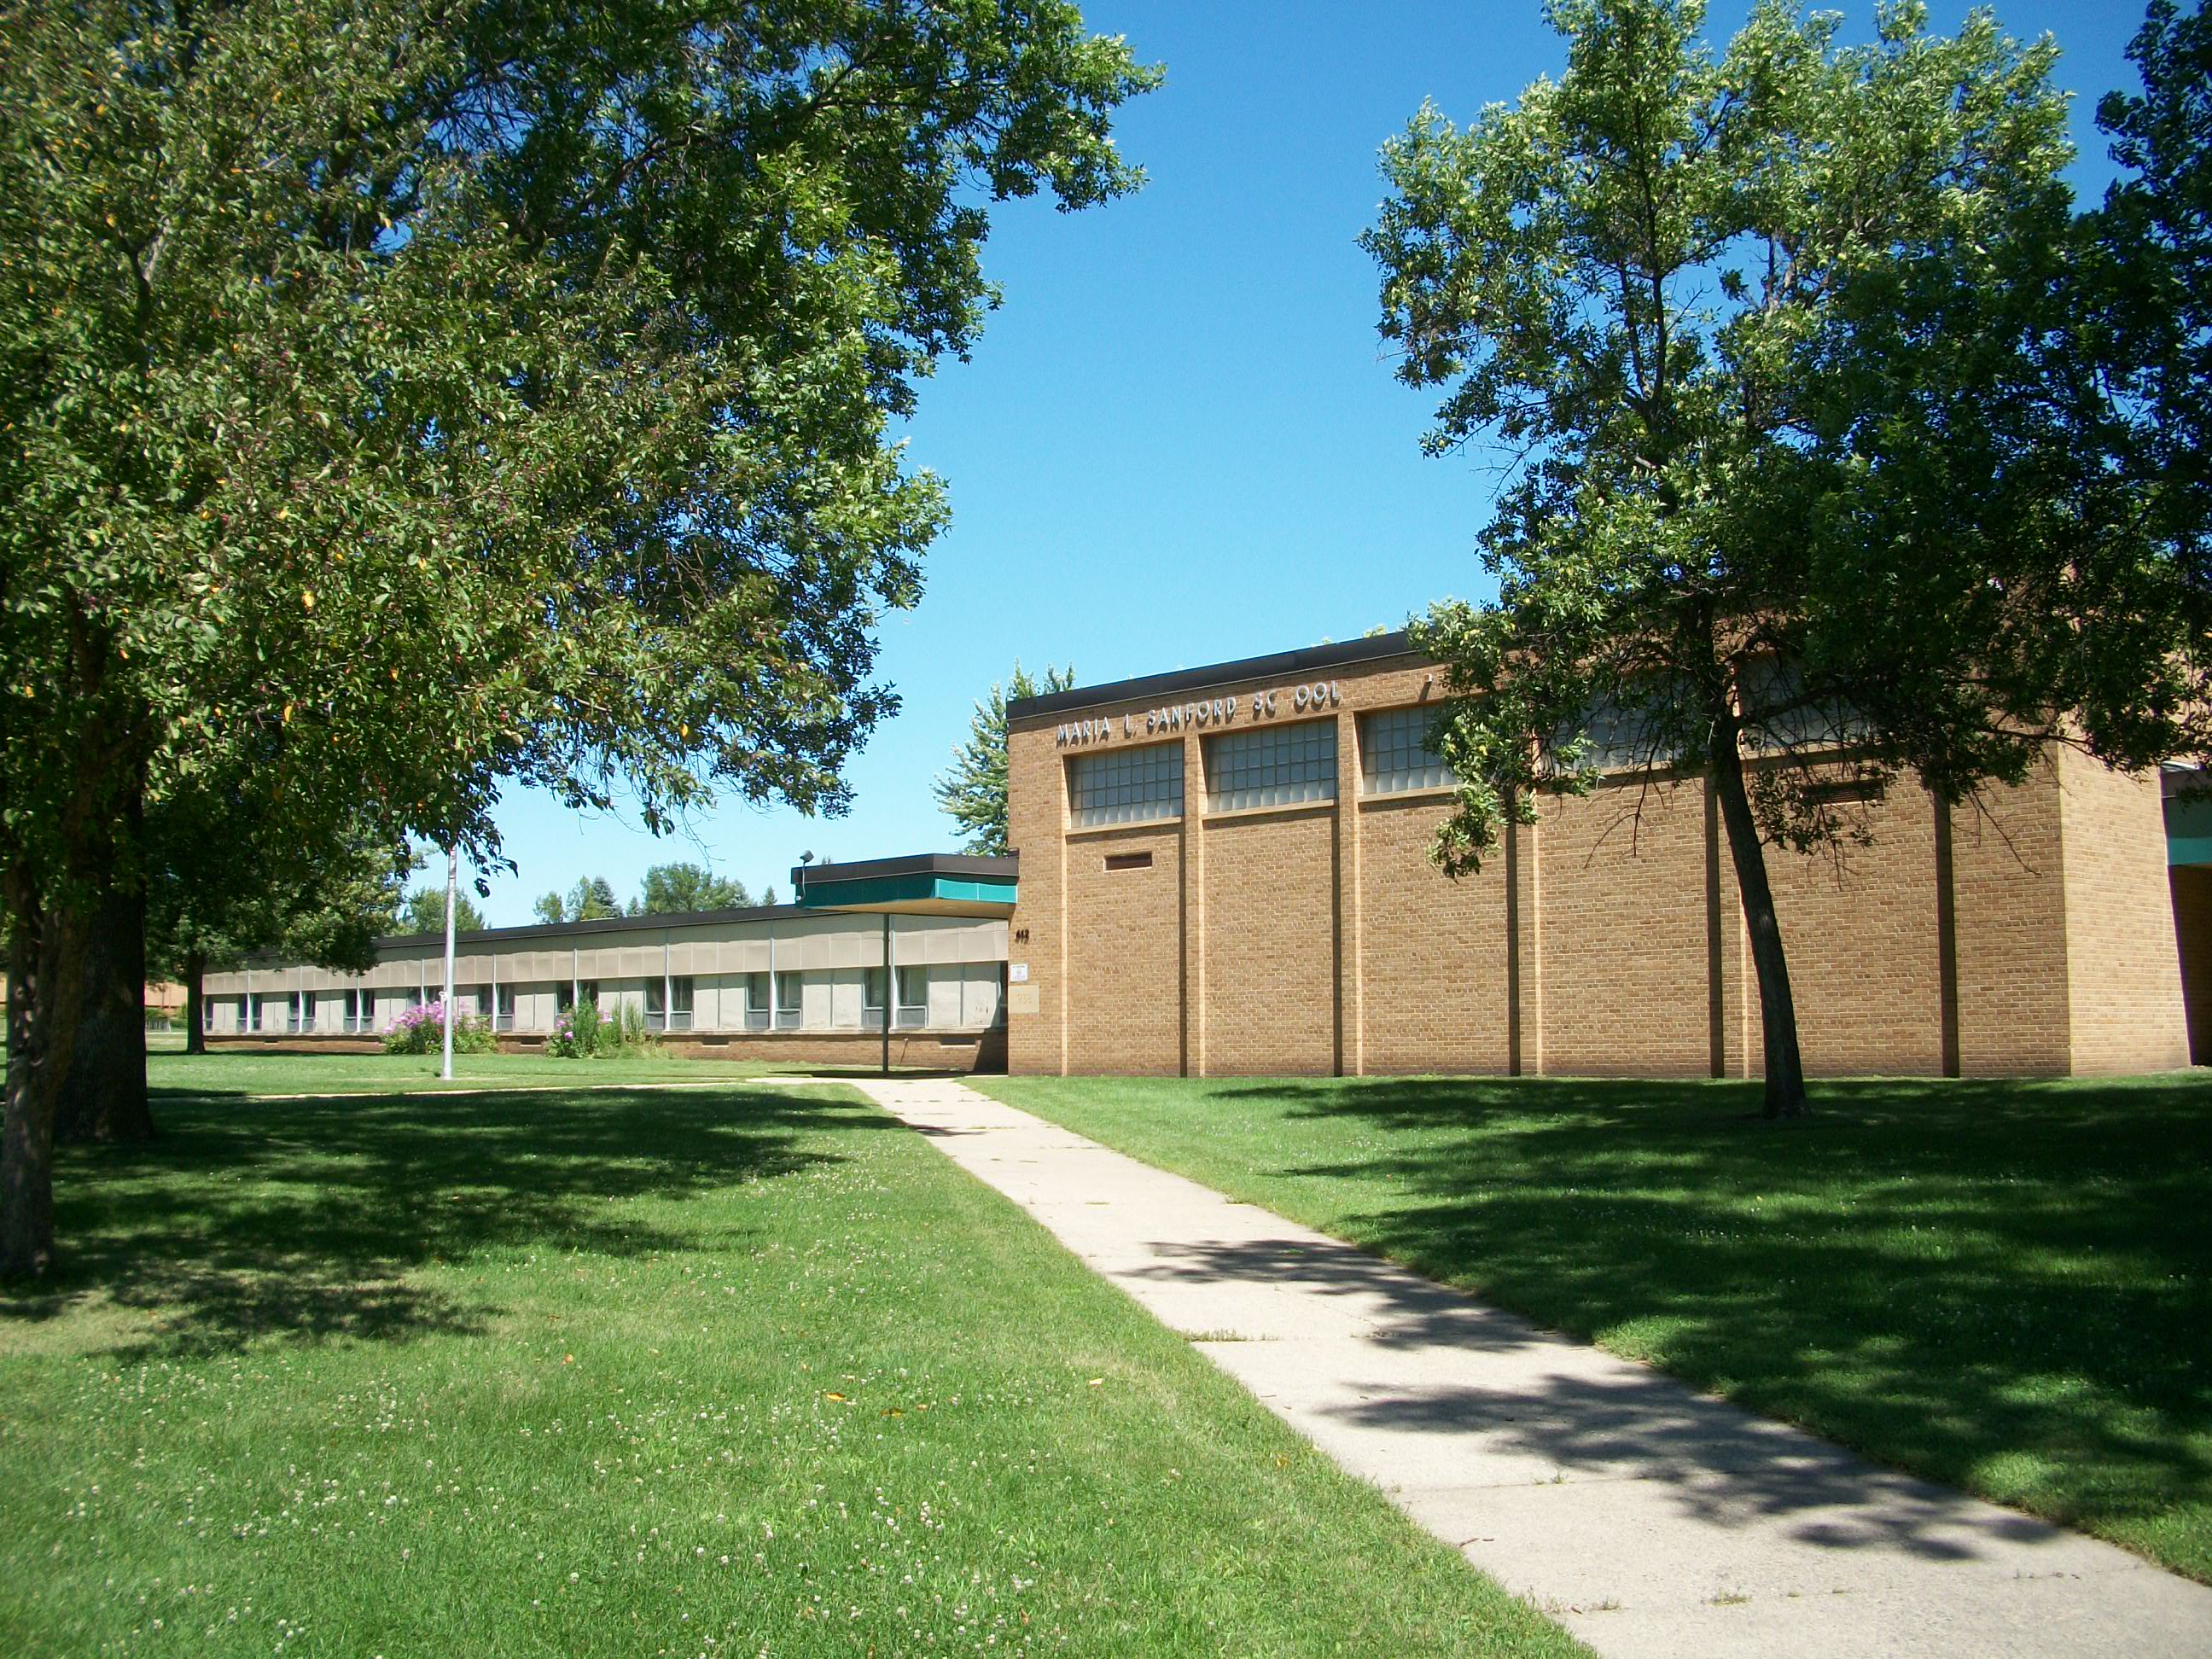 Sanford Elementary School